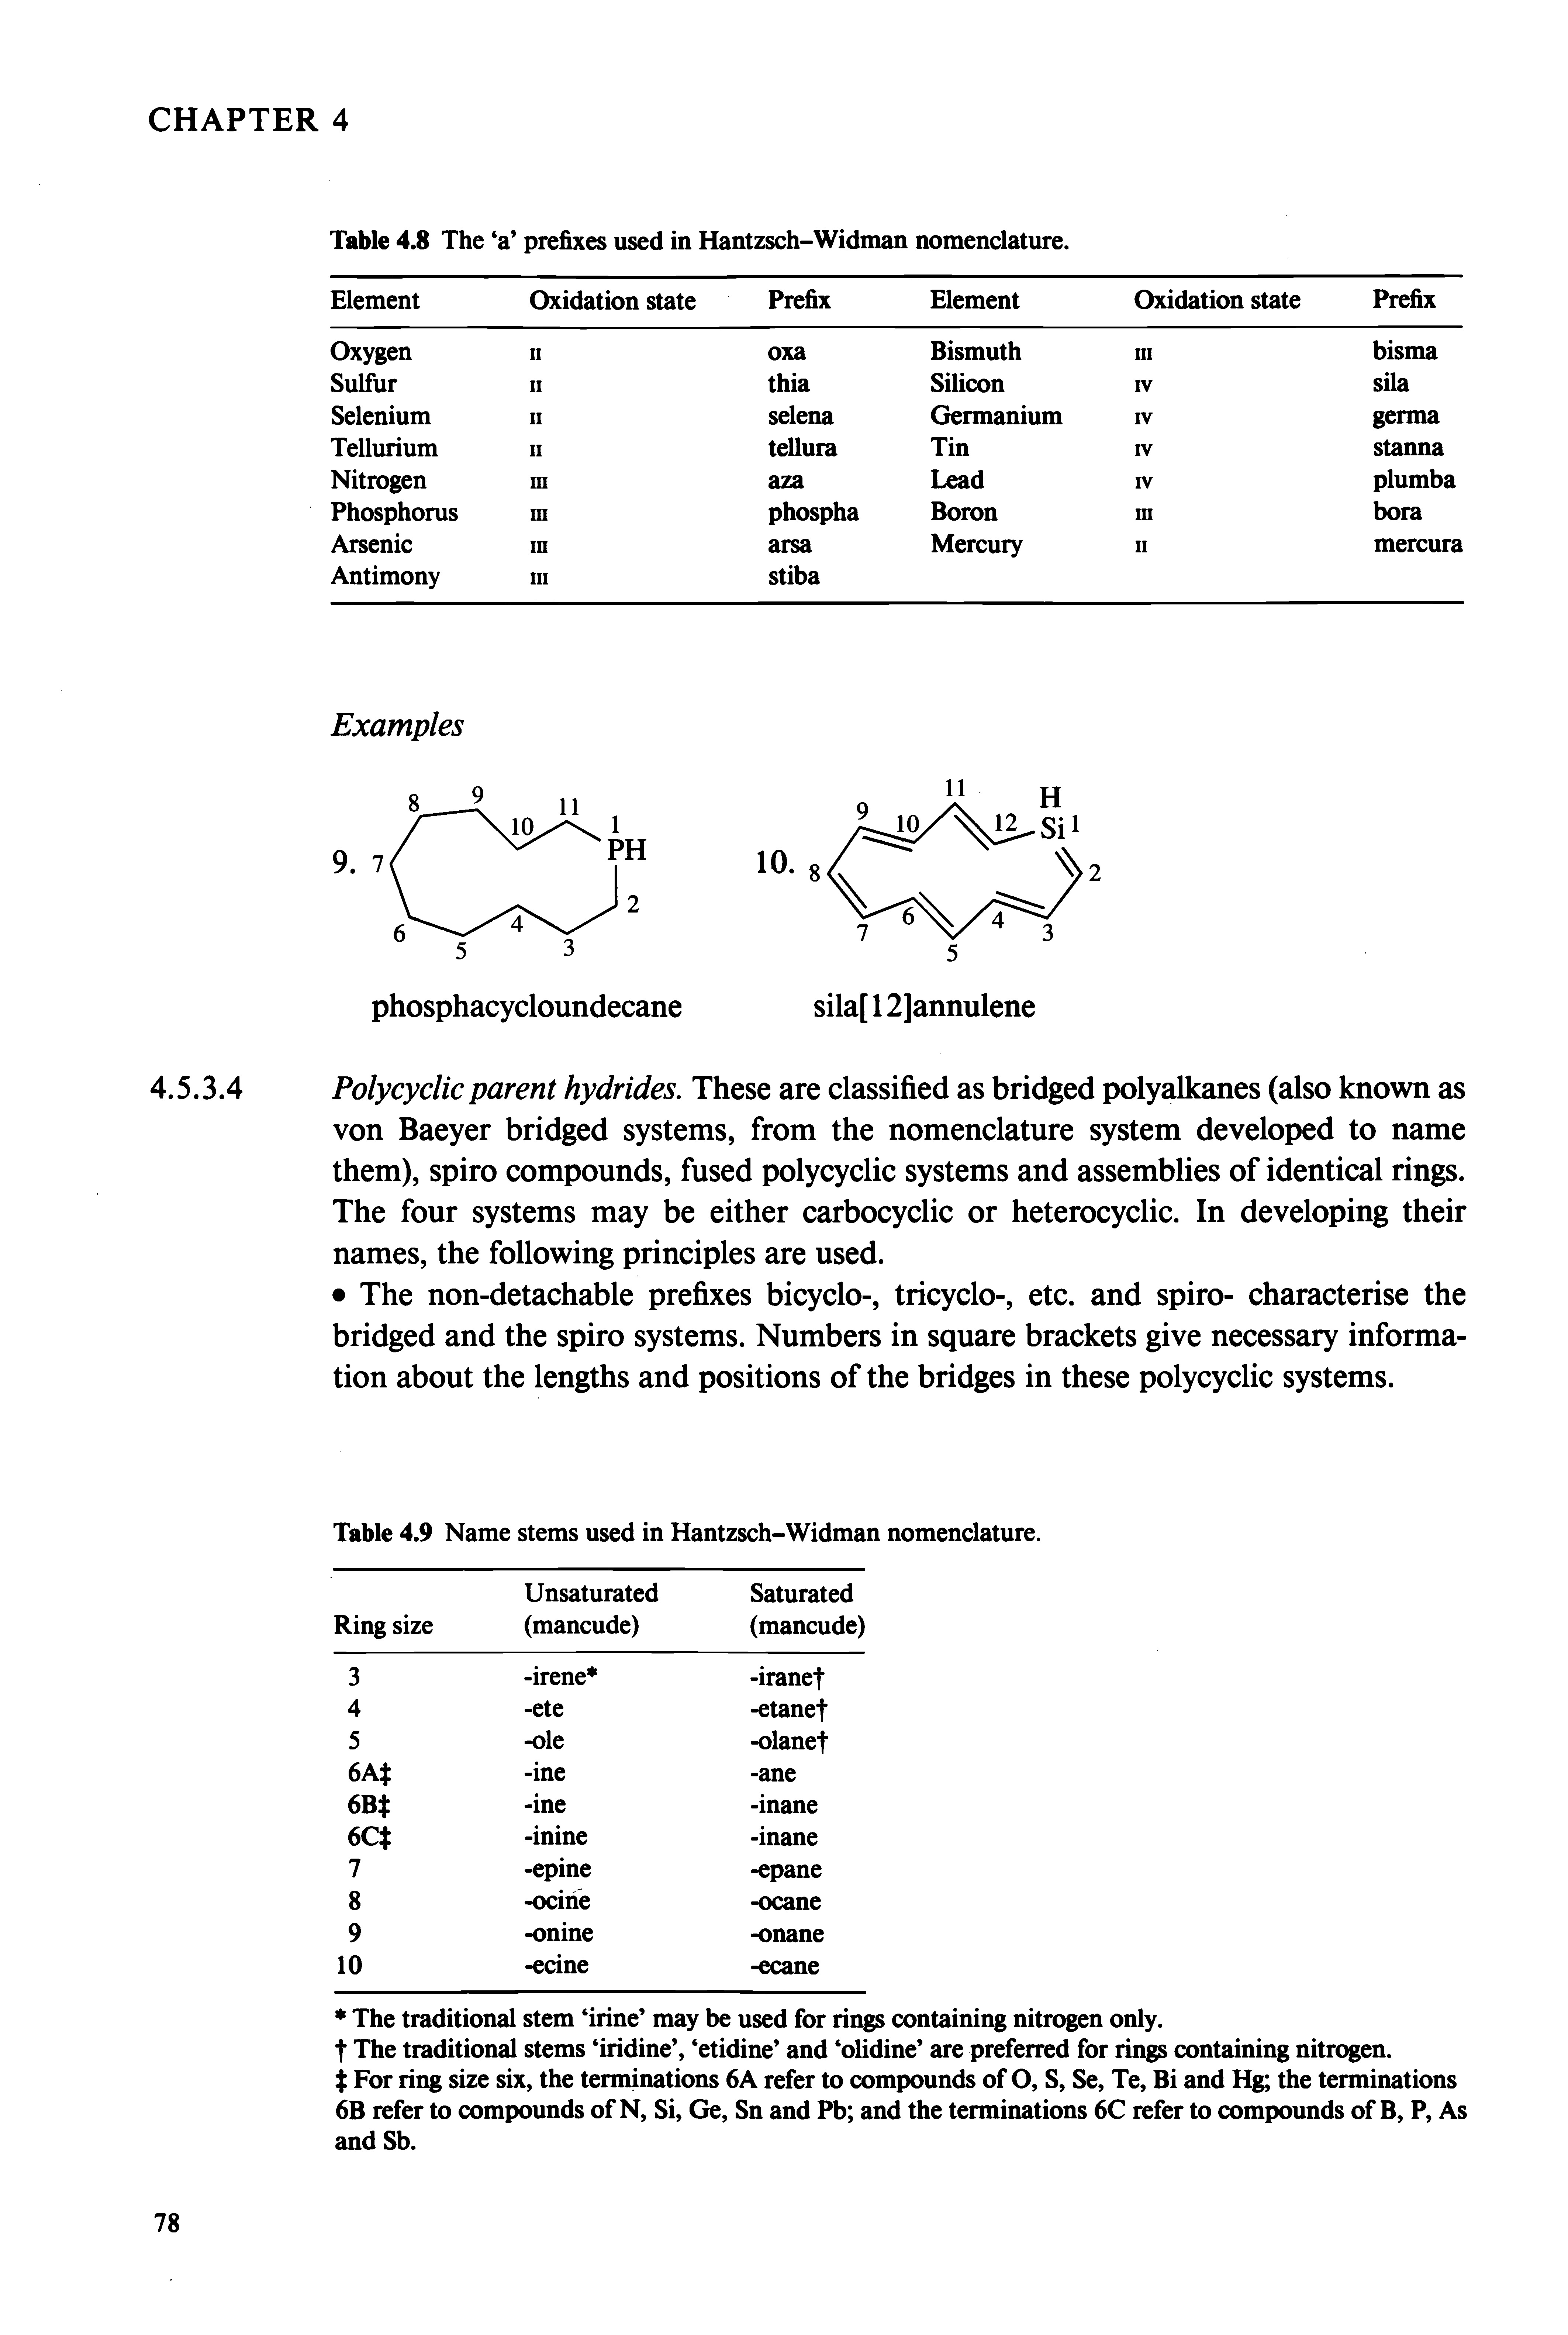 Table 4.9 Name stems used in Hantzsch-Widman nomenclature.